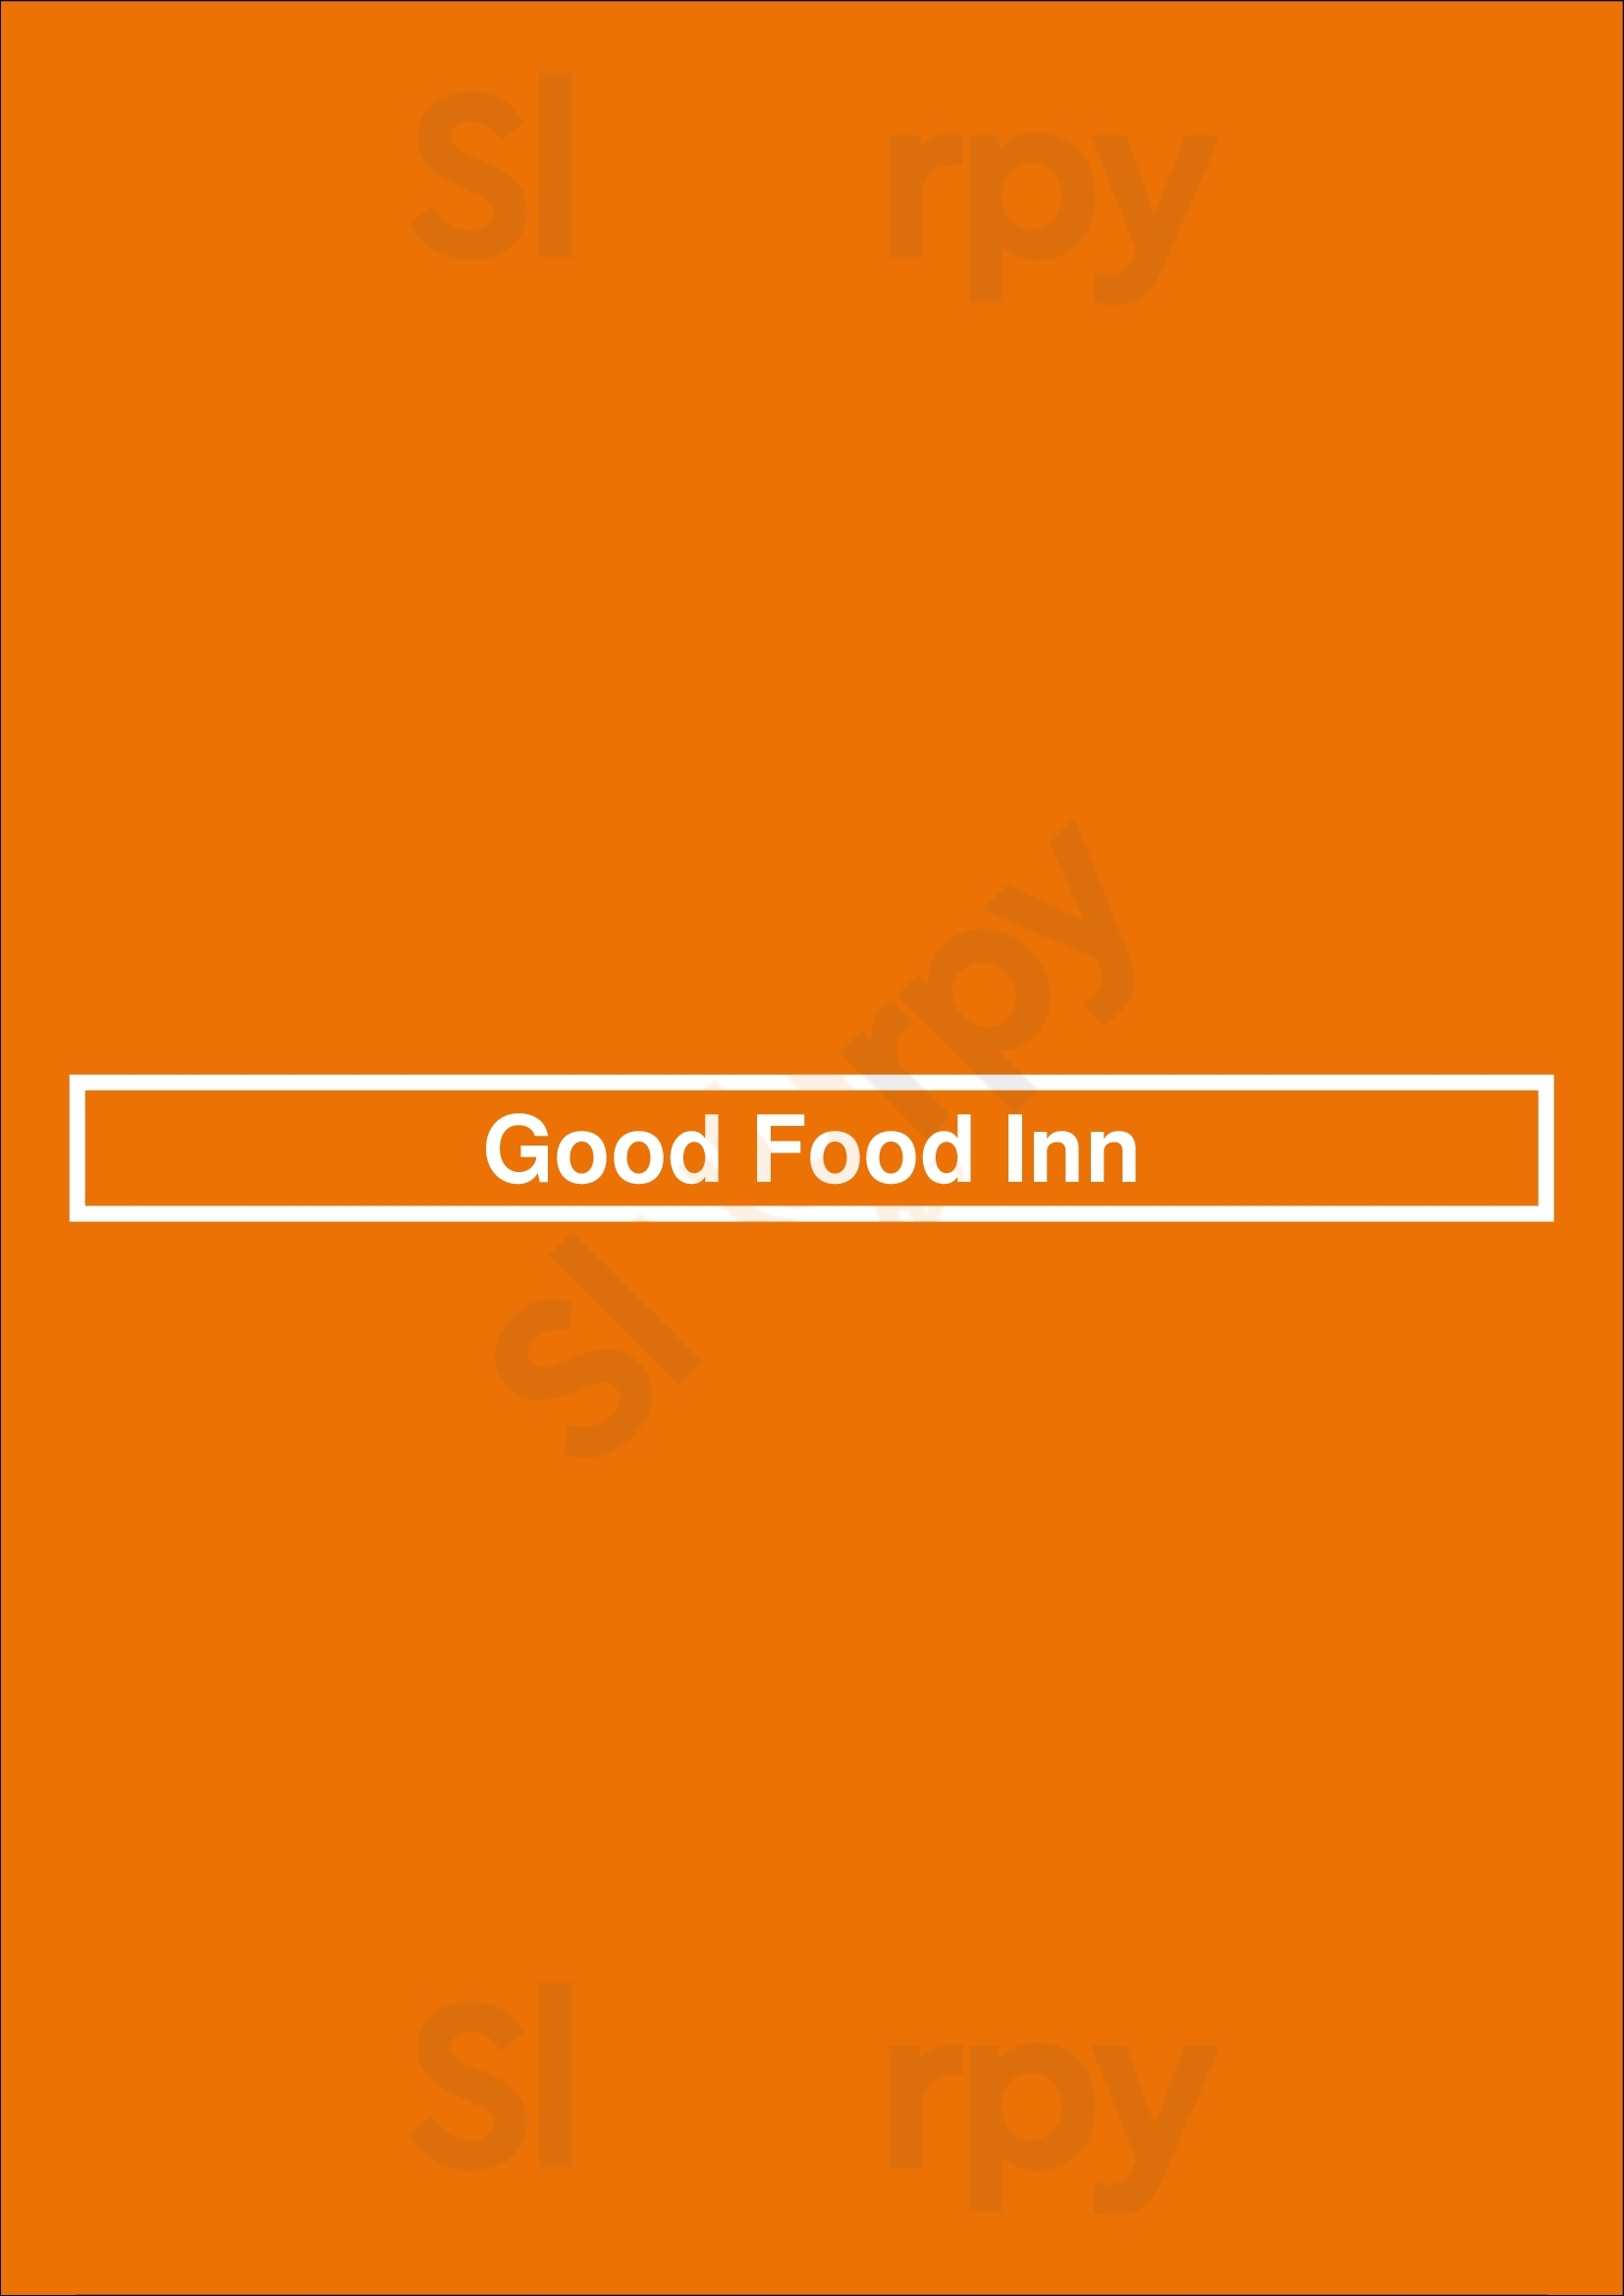 Good Food Inn Derby Menu - 1